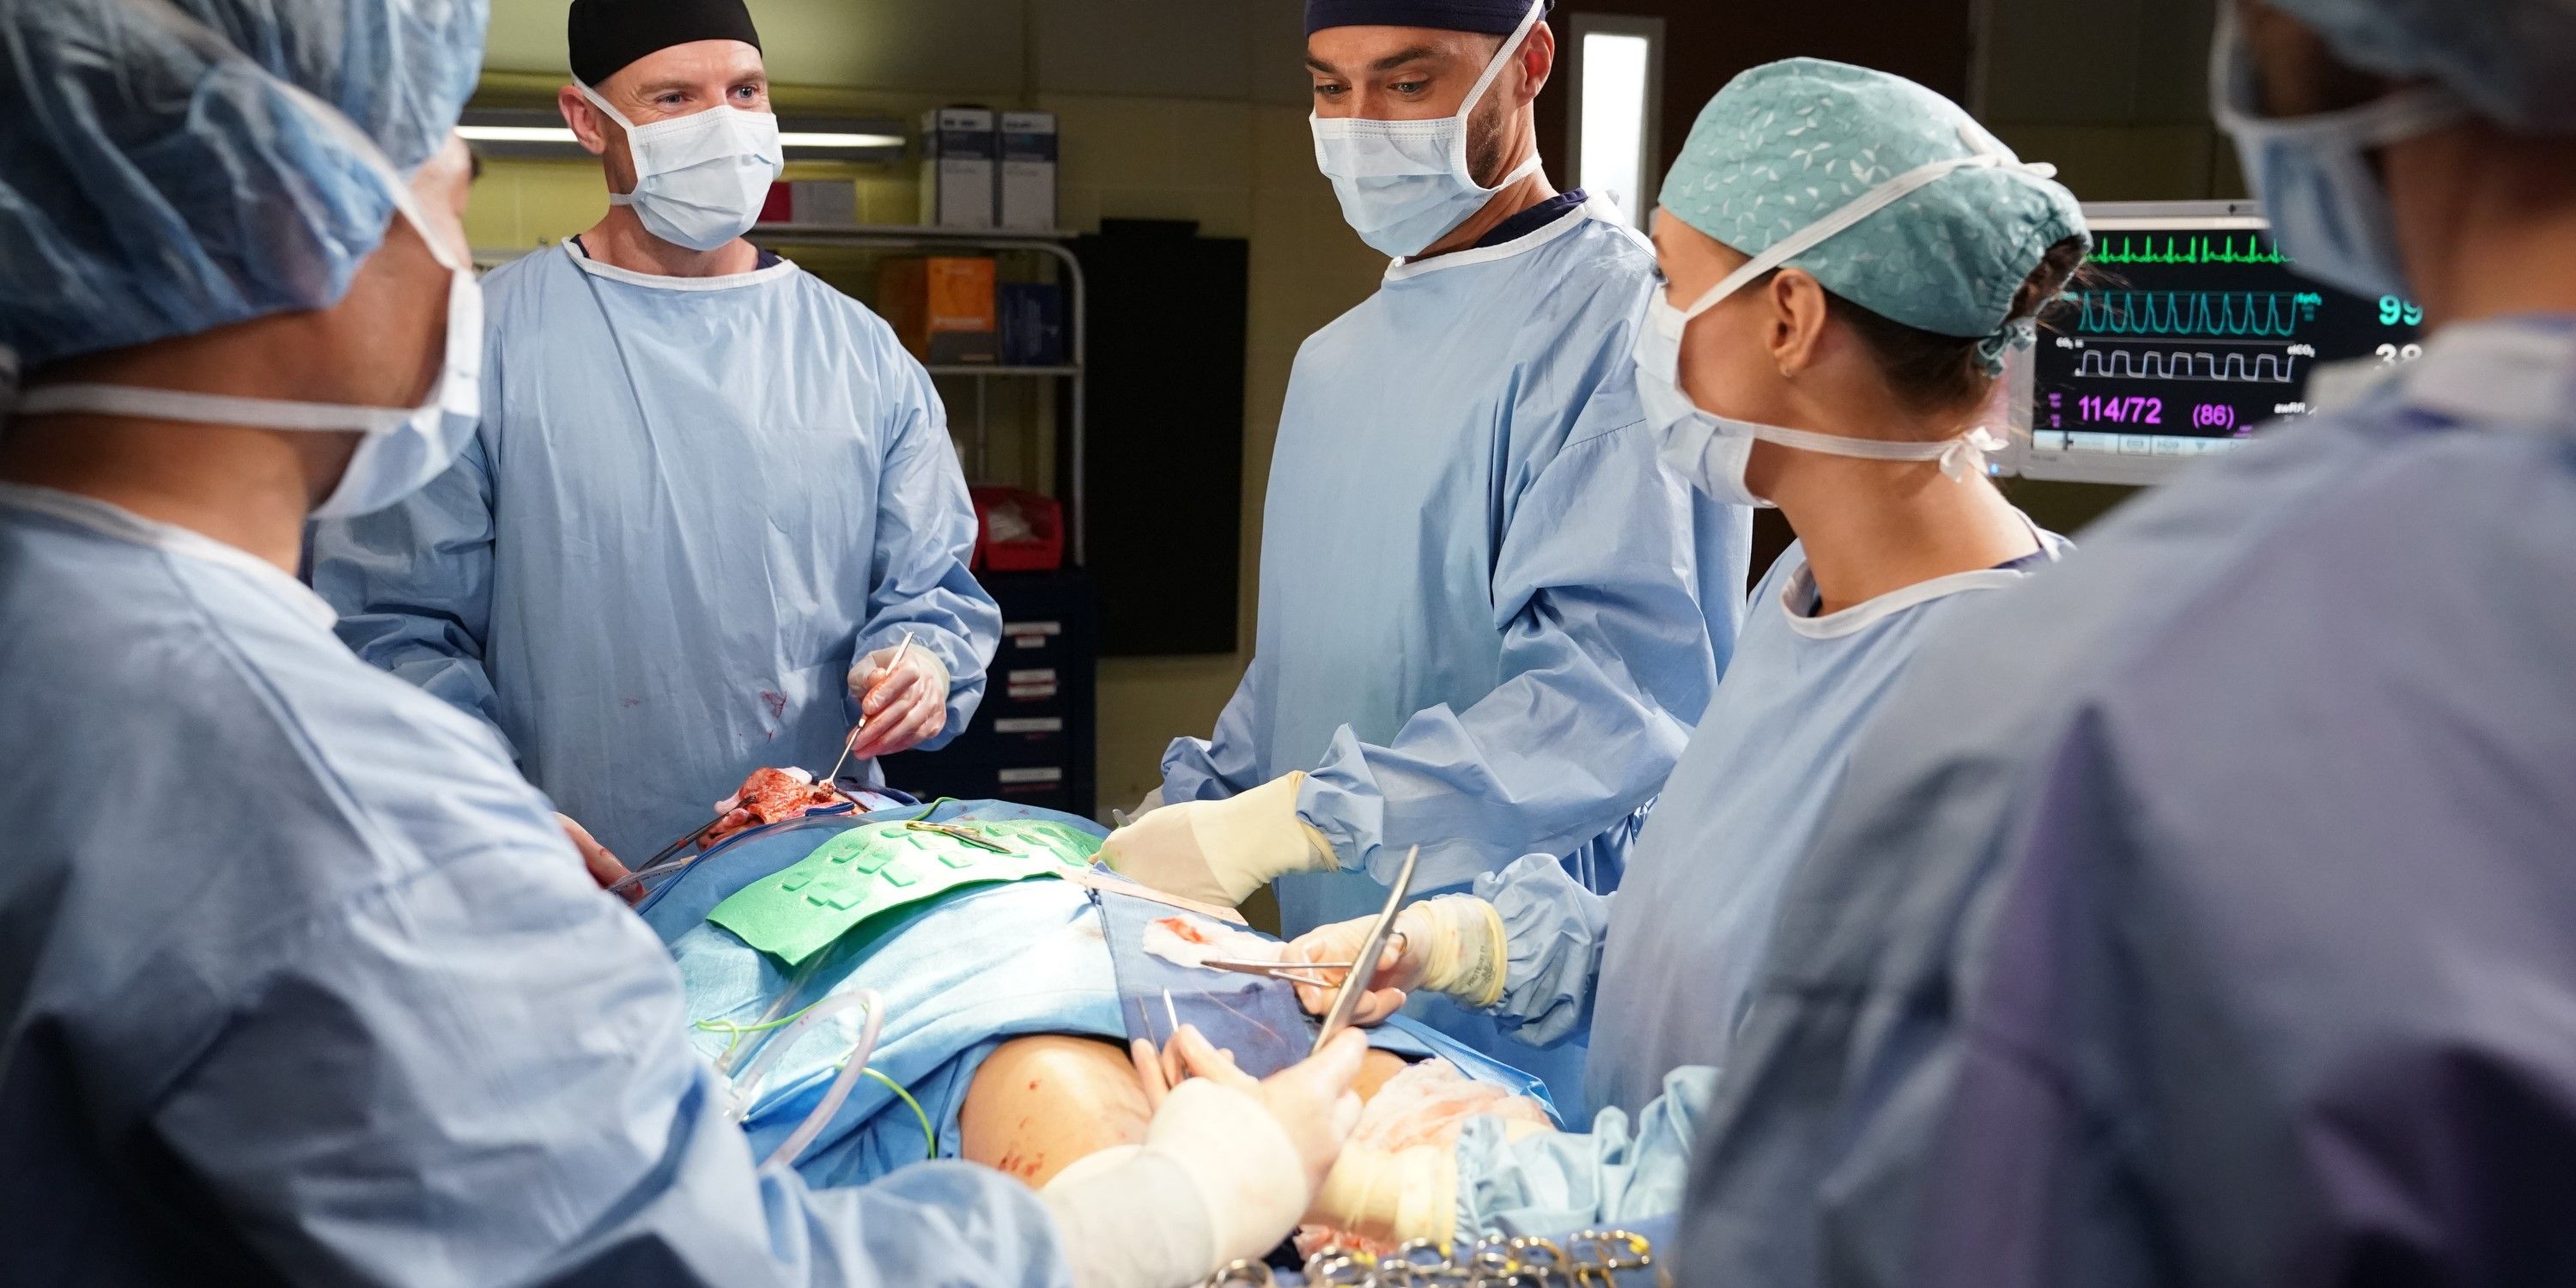 Grey's Anatomy operating room conduct.